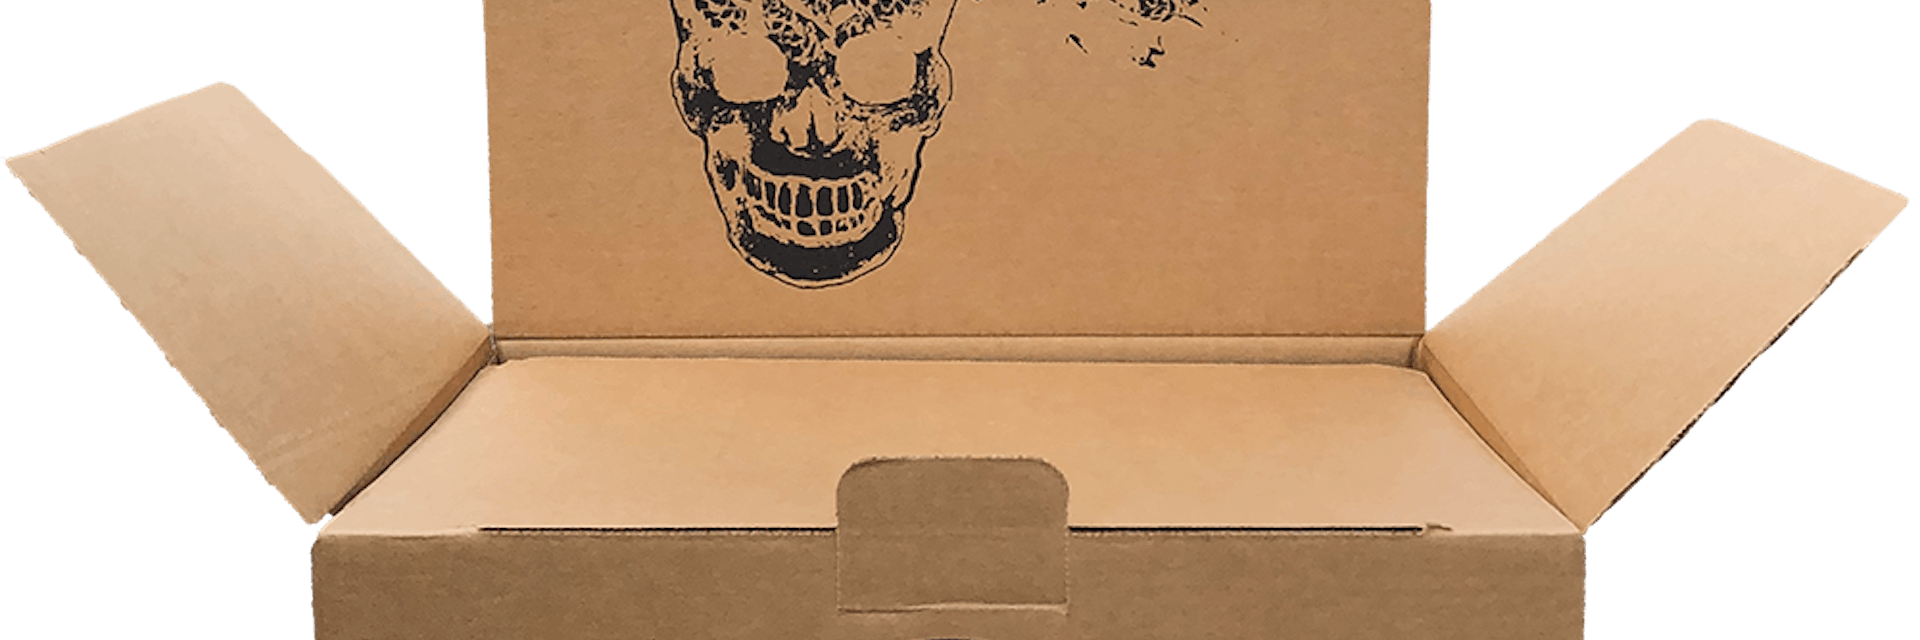 Custom printed beer shipping boxes